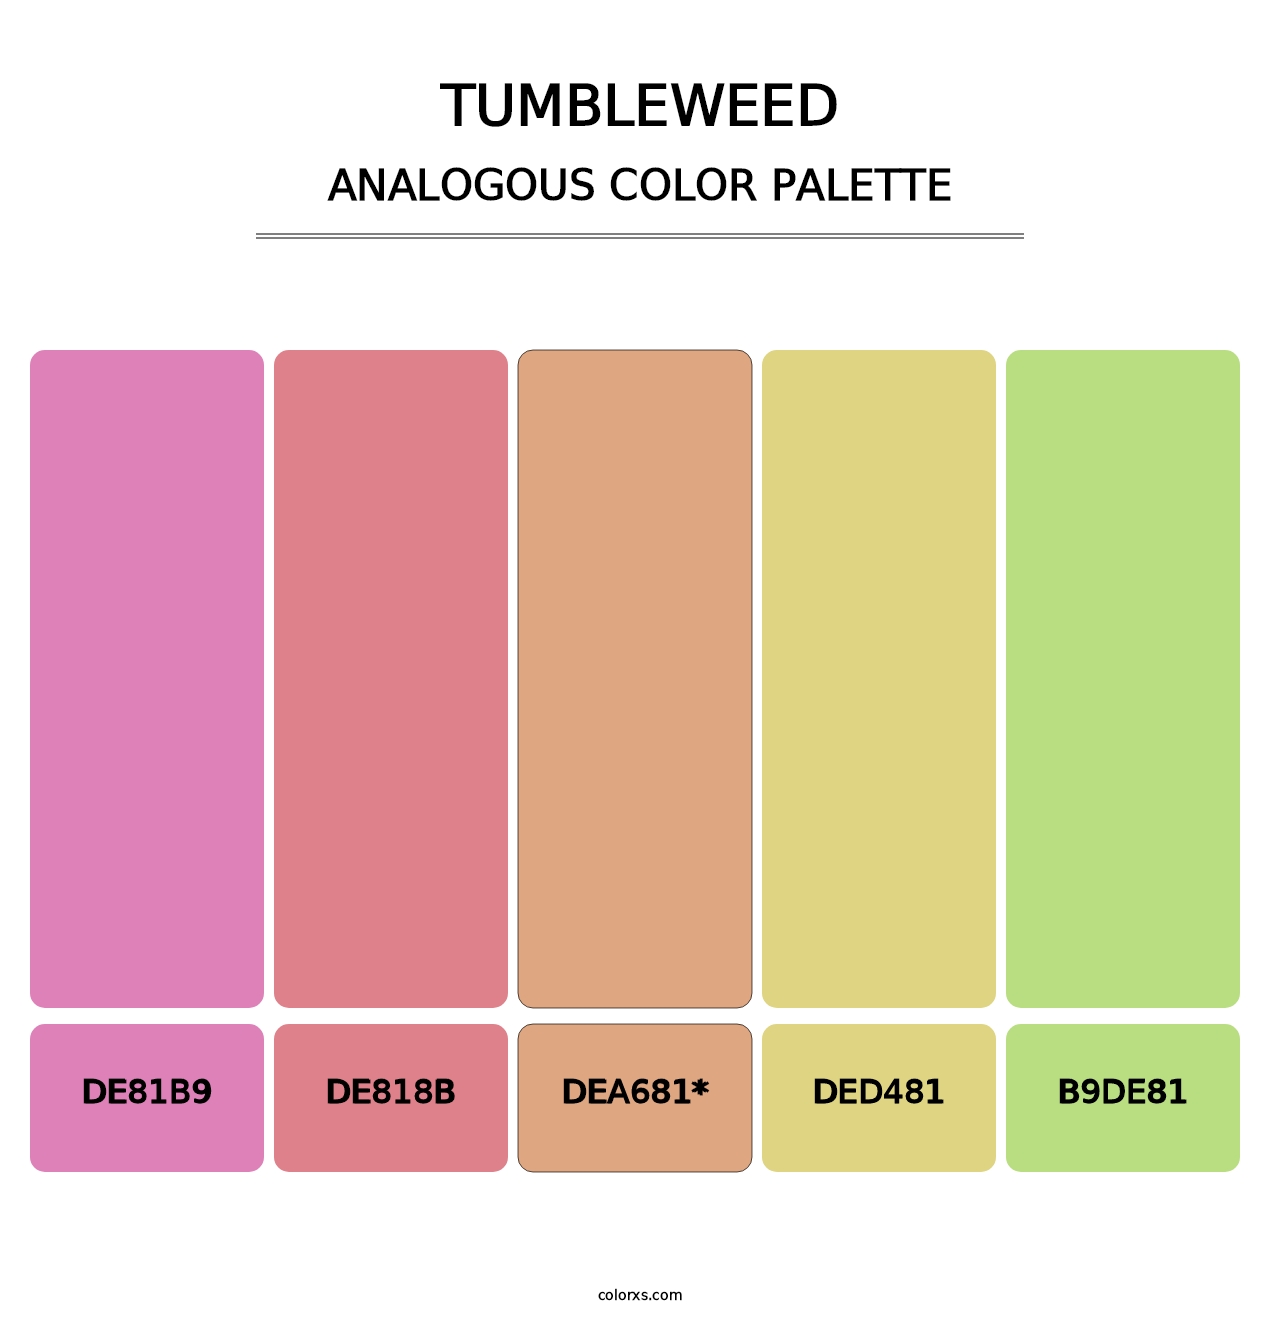 Tumbleweed - Analogous Color Palette